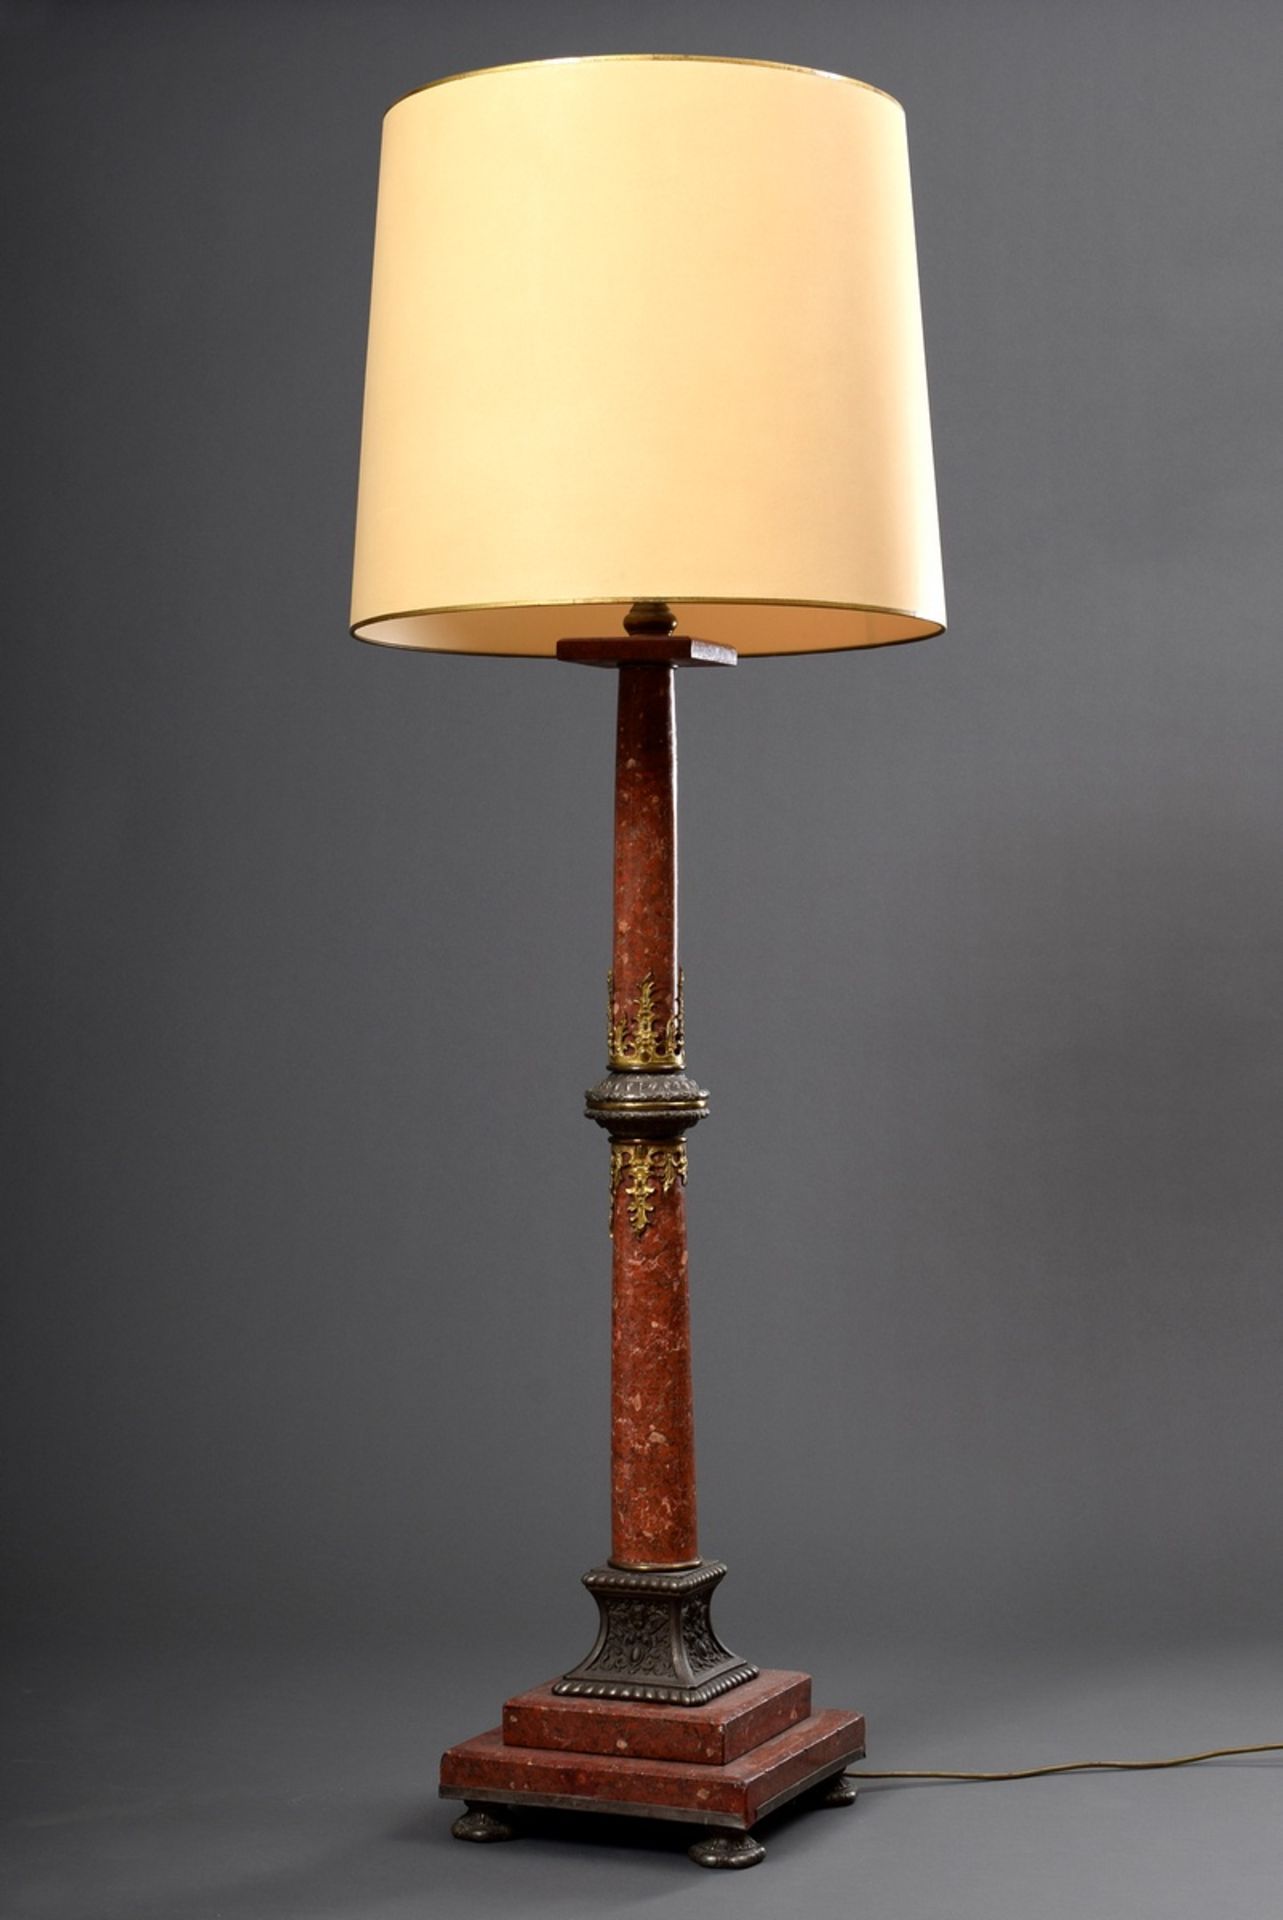 Rote Marmor Stehlampe mit ornamentalen Messingbeschlag, H. ehem. Slg. Charles Crodel (1894-1973)/Mn - Bild 2 aus 7